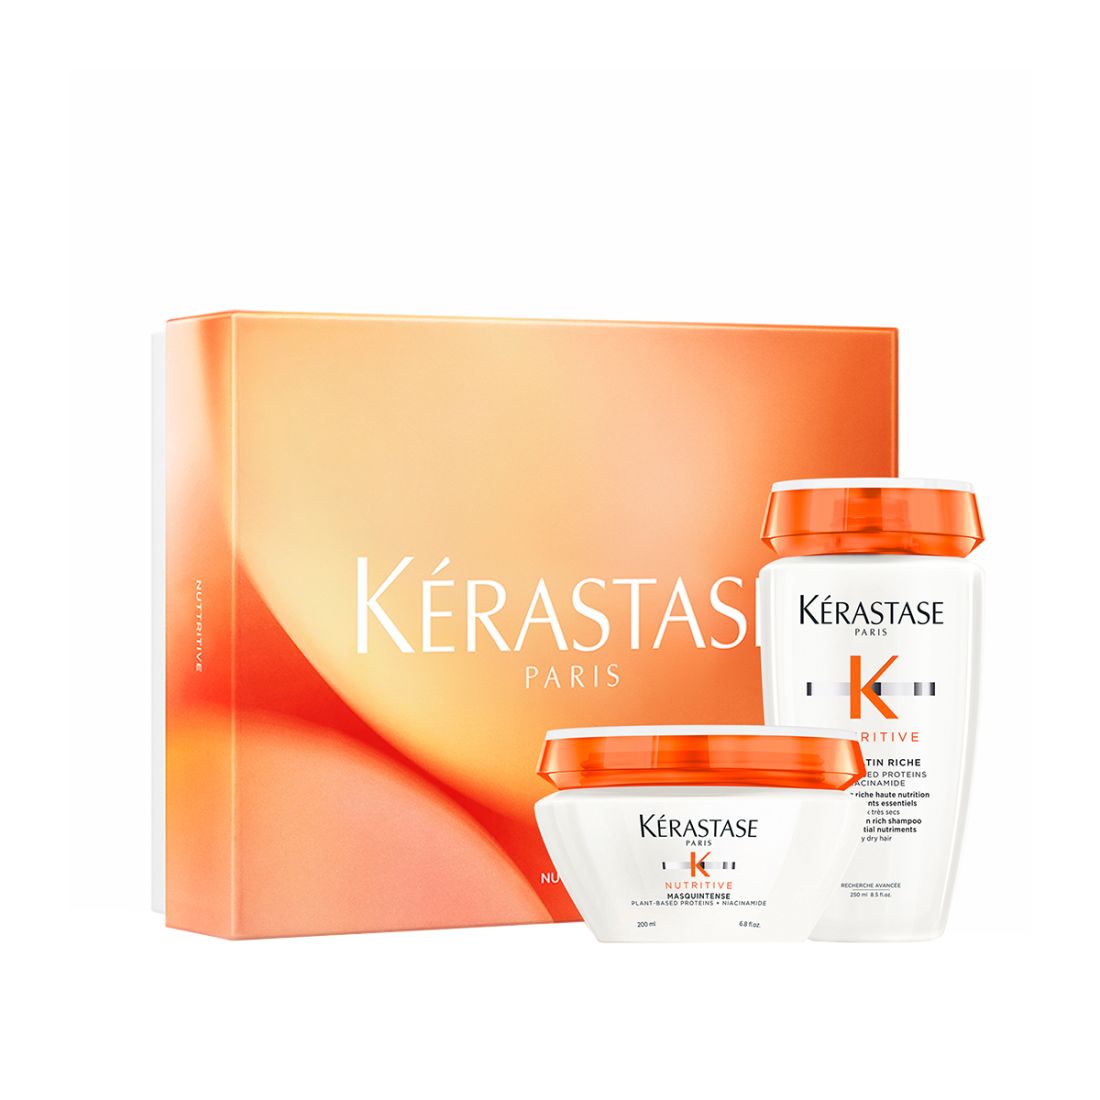 Kerastase Nutritive - Limited Edition Σετ Περιποίησης για Πολύ Ξηρά Μαλλιά (Bain Satin Riche Shampoo 250ml, Masquintense Hair Mask 200ml)